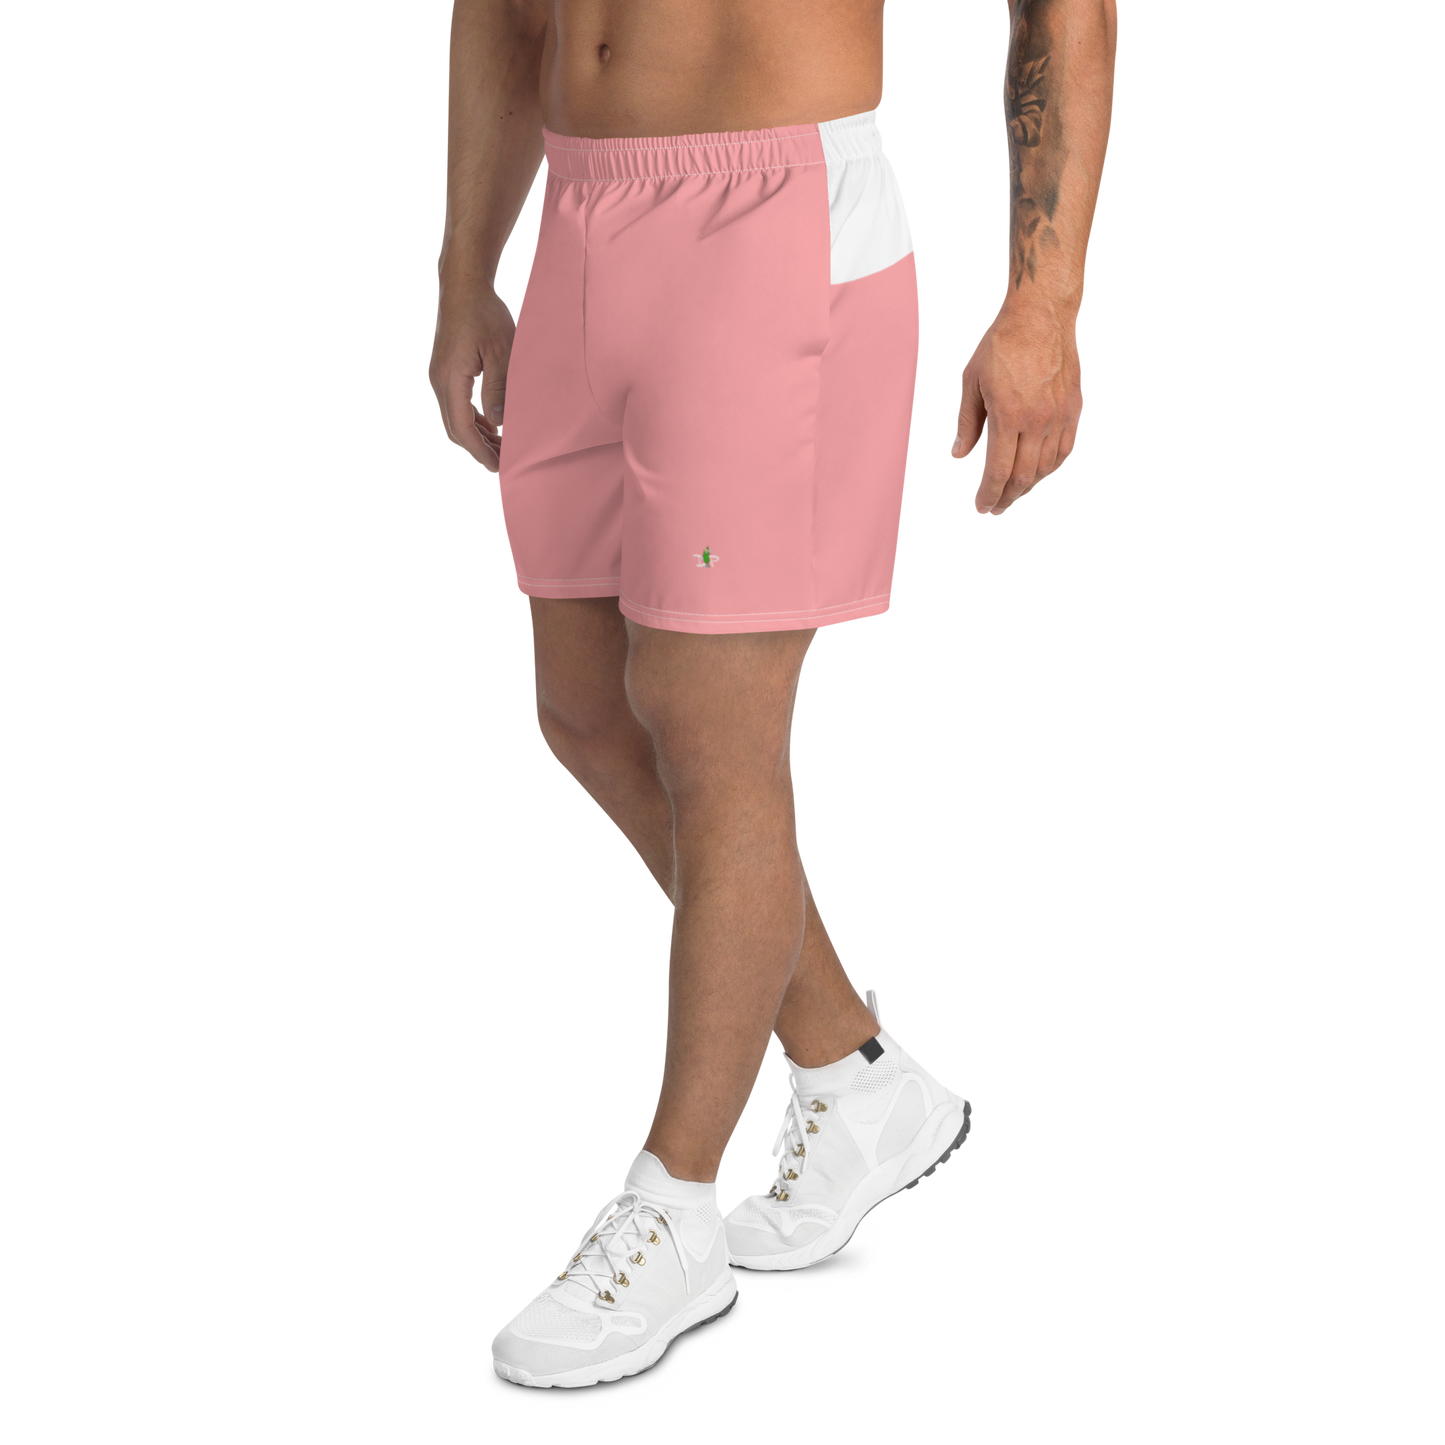 Dizzy Pickle's ZK10 Men's Athletic Shorts - Pale Shell